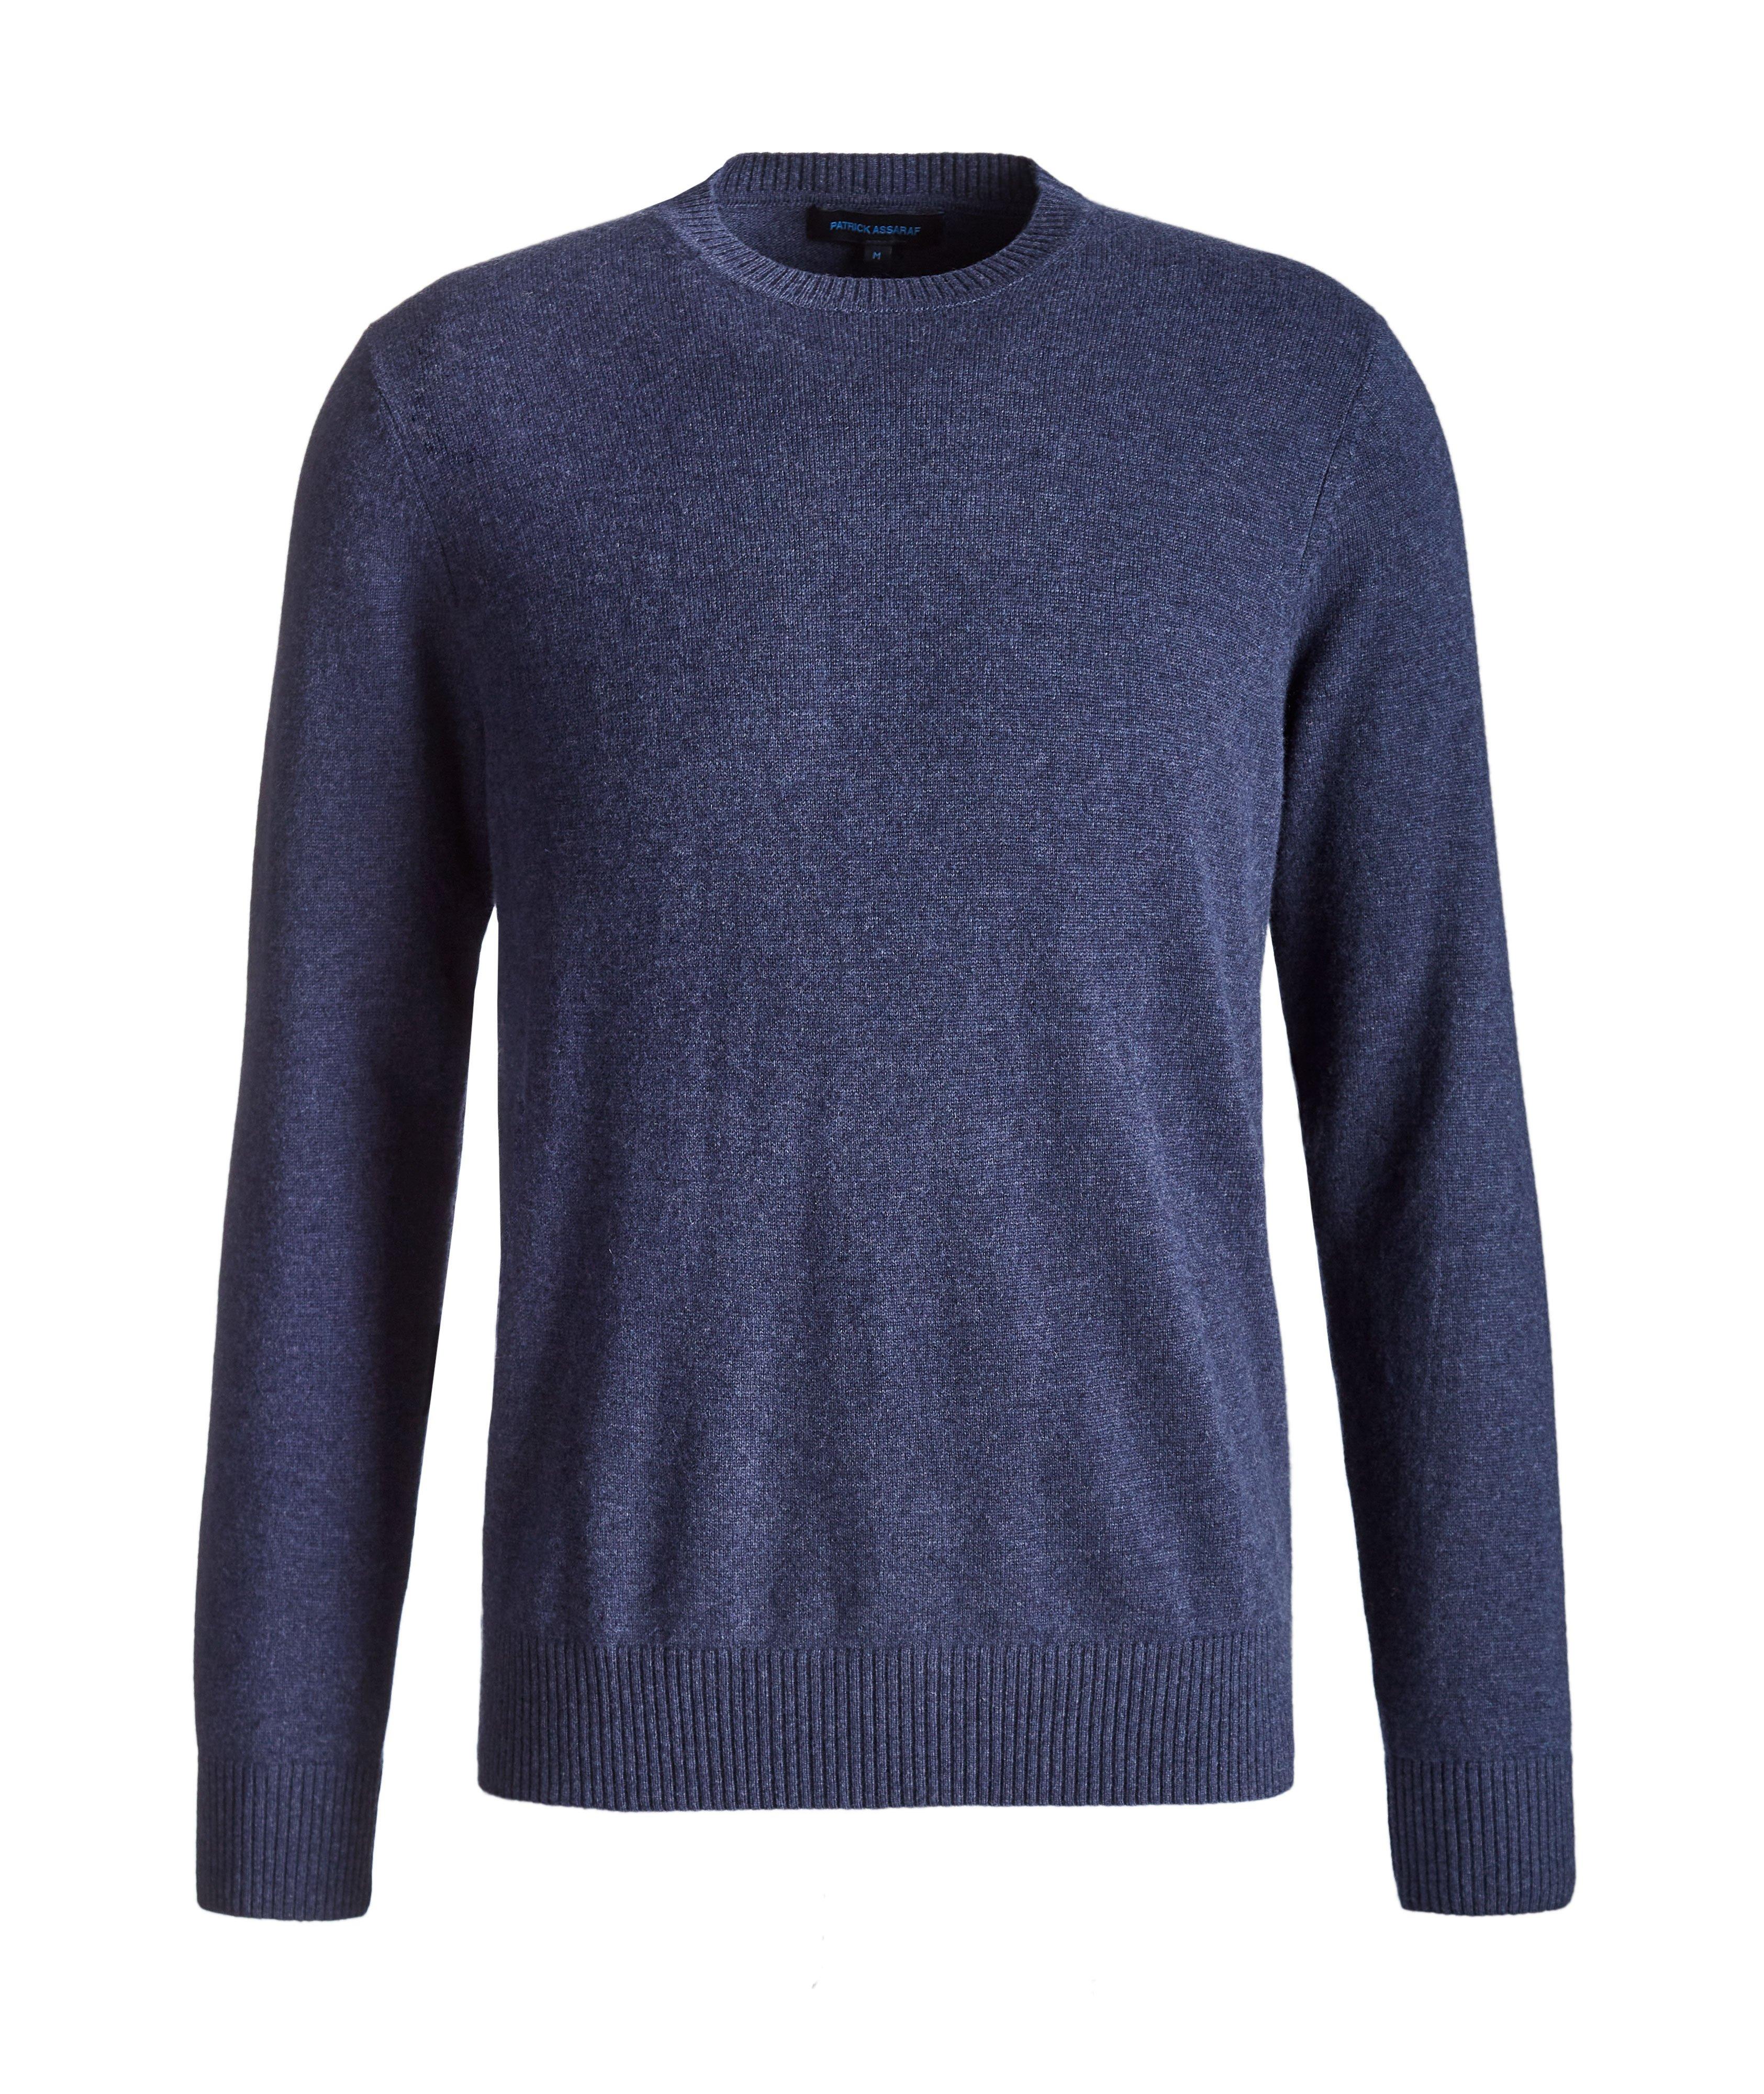 Wool-Cashmere Knit Sweater image 0